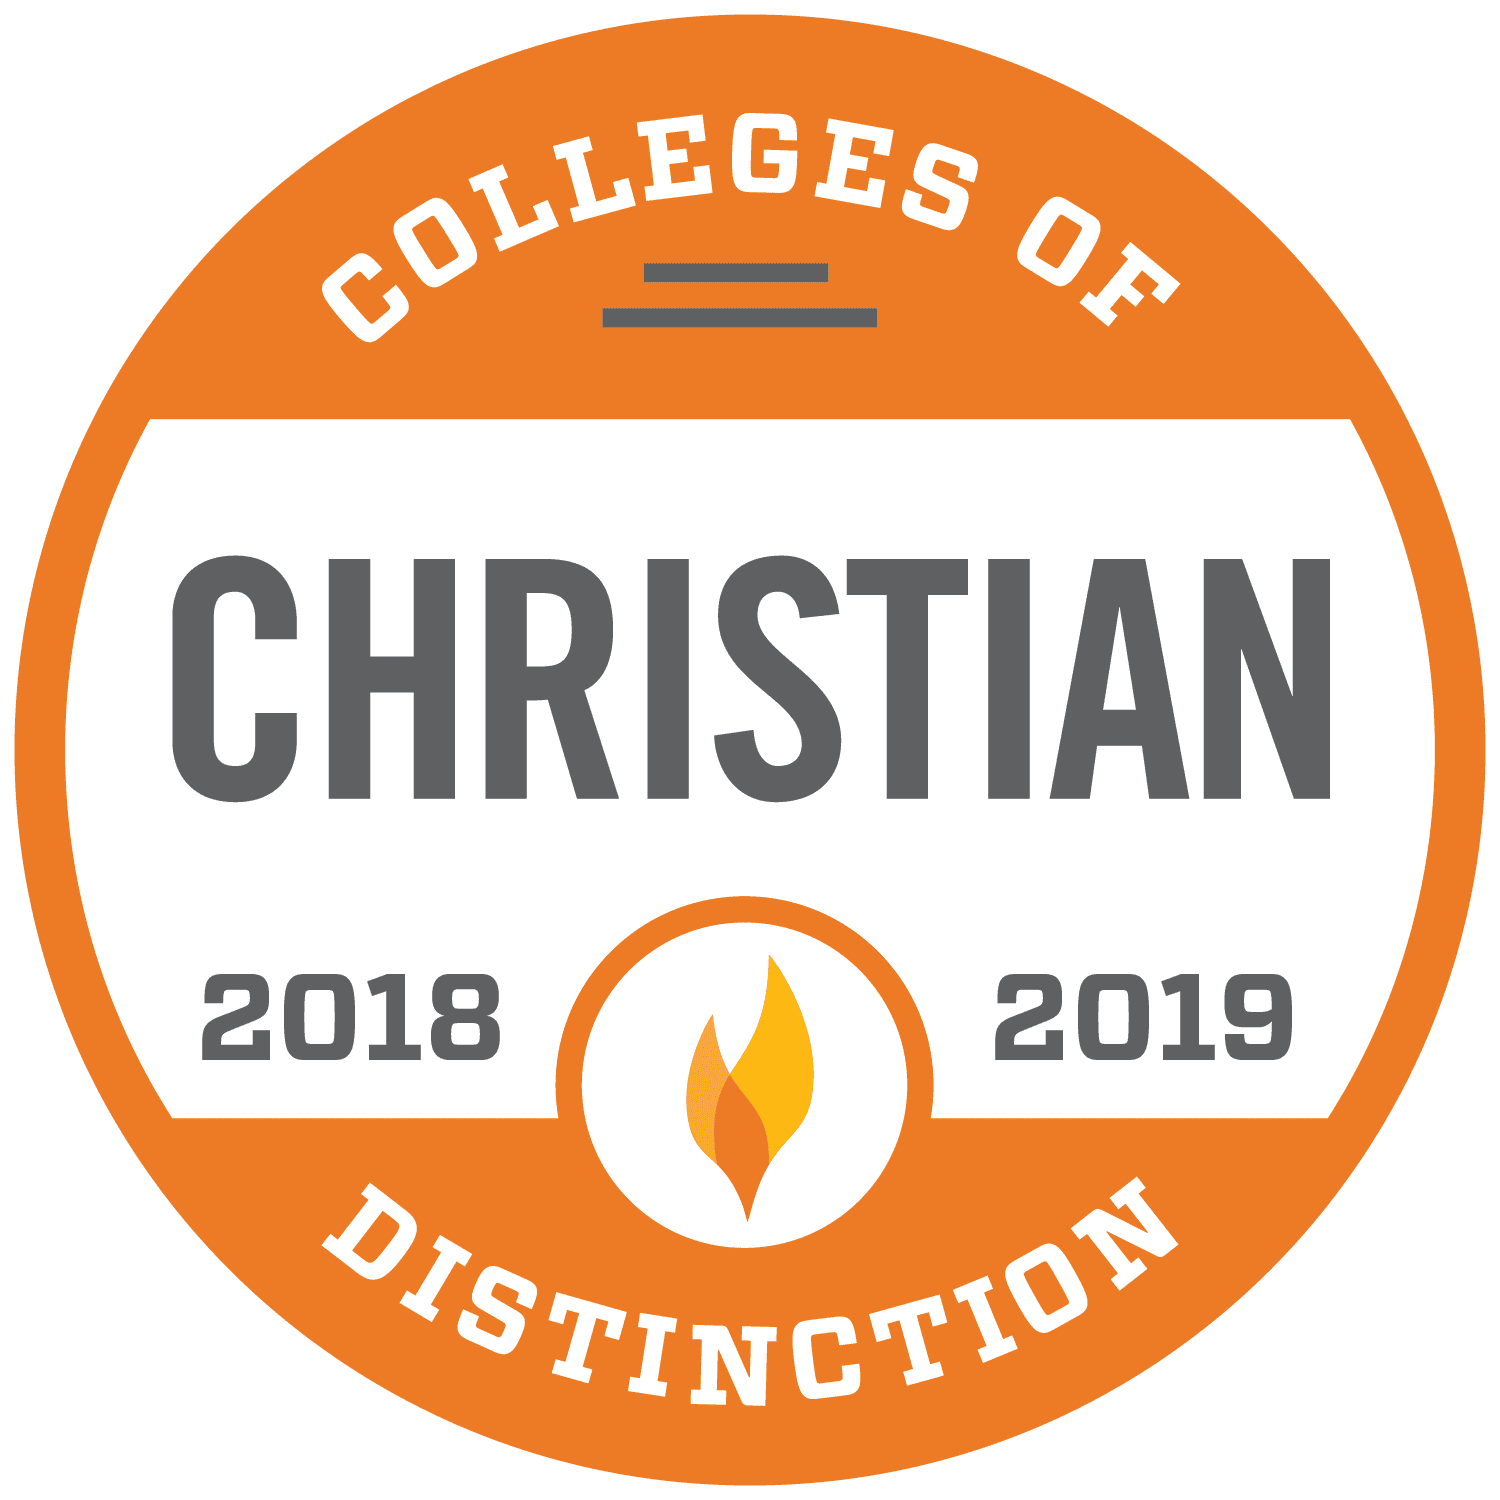 Orange circle. States "Colleges of Distinction. Christian 2018-2019"